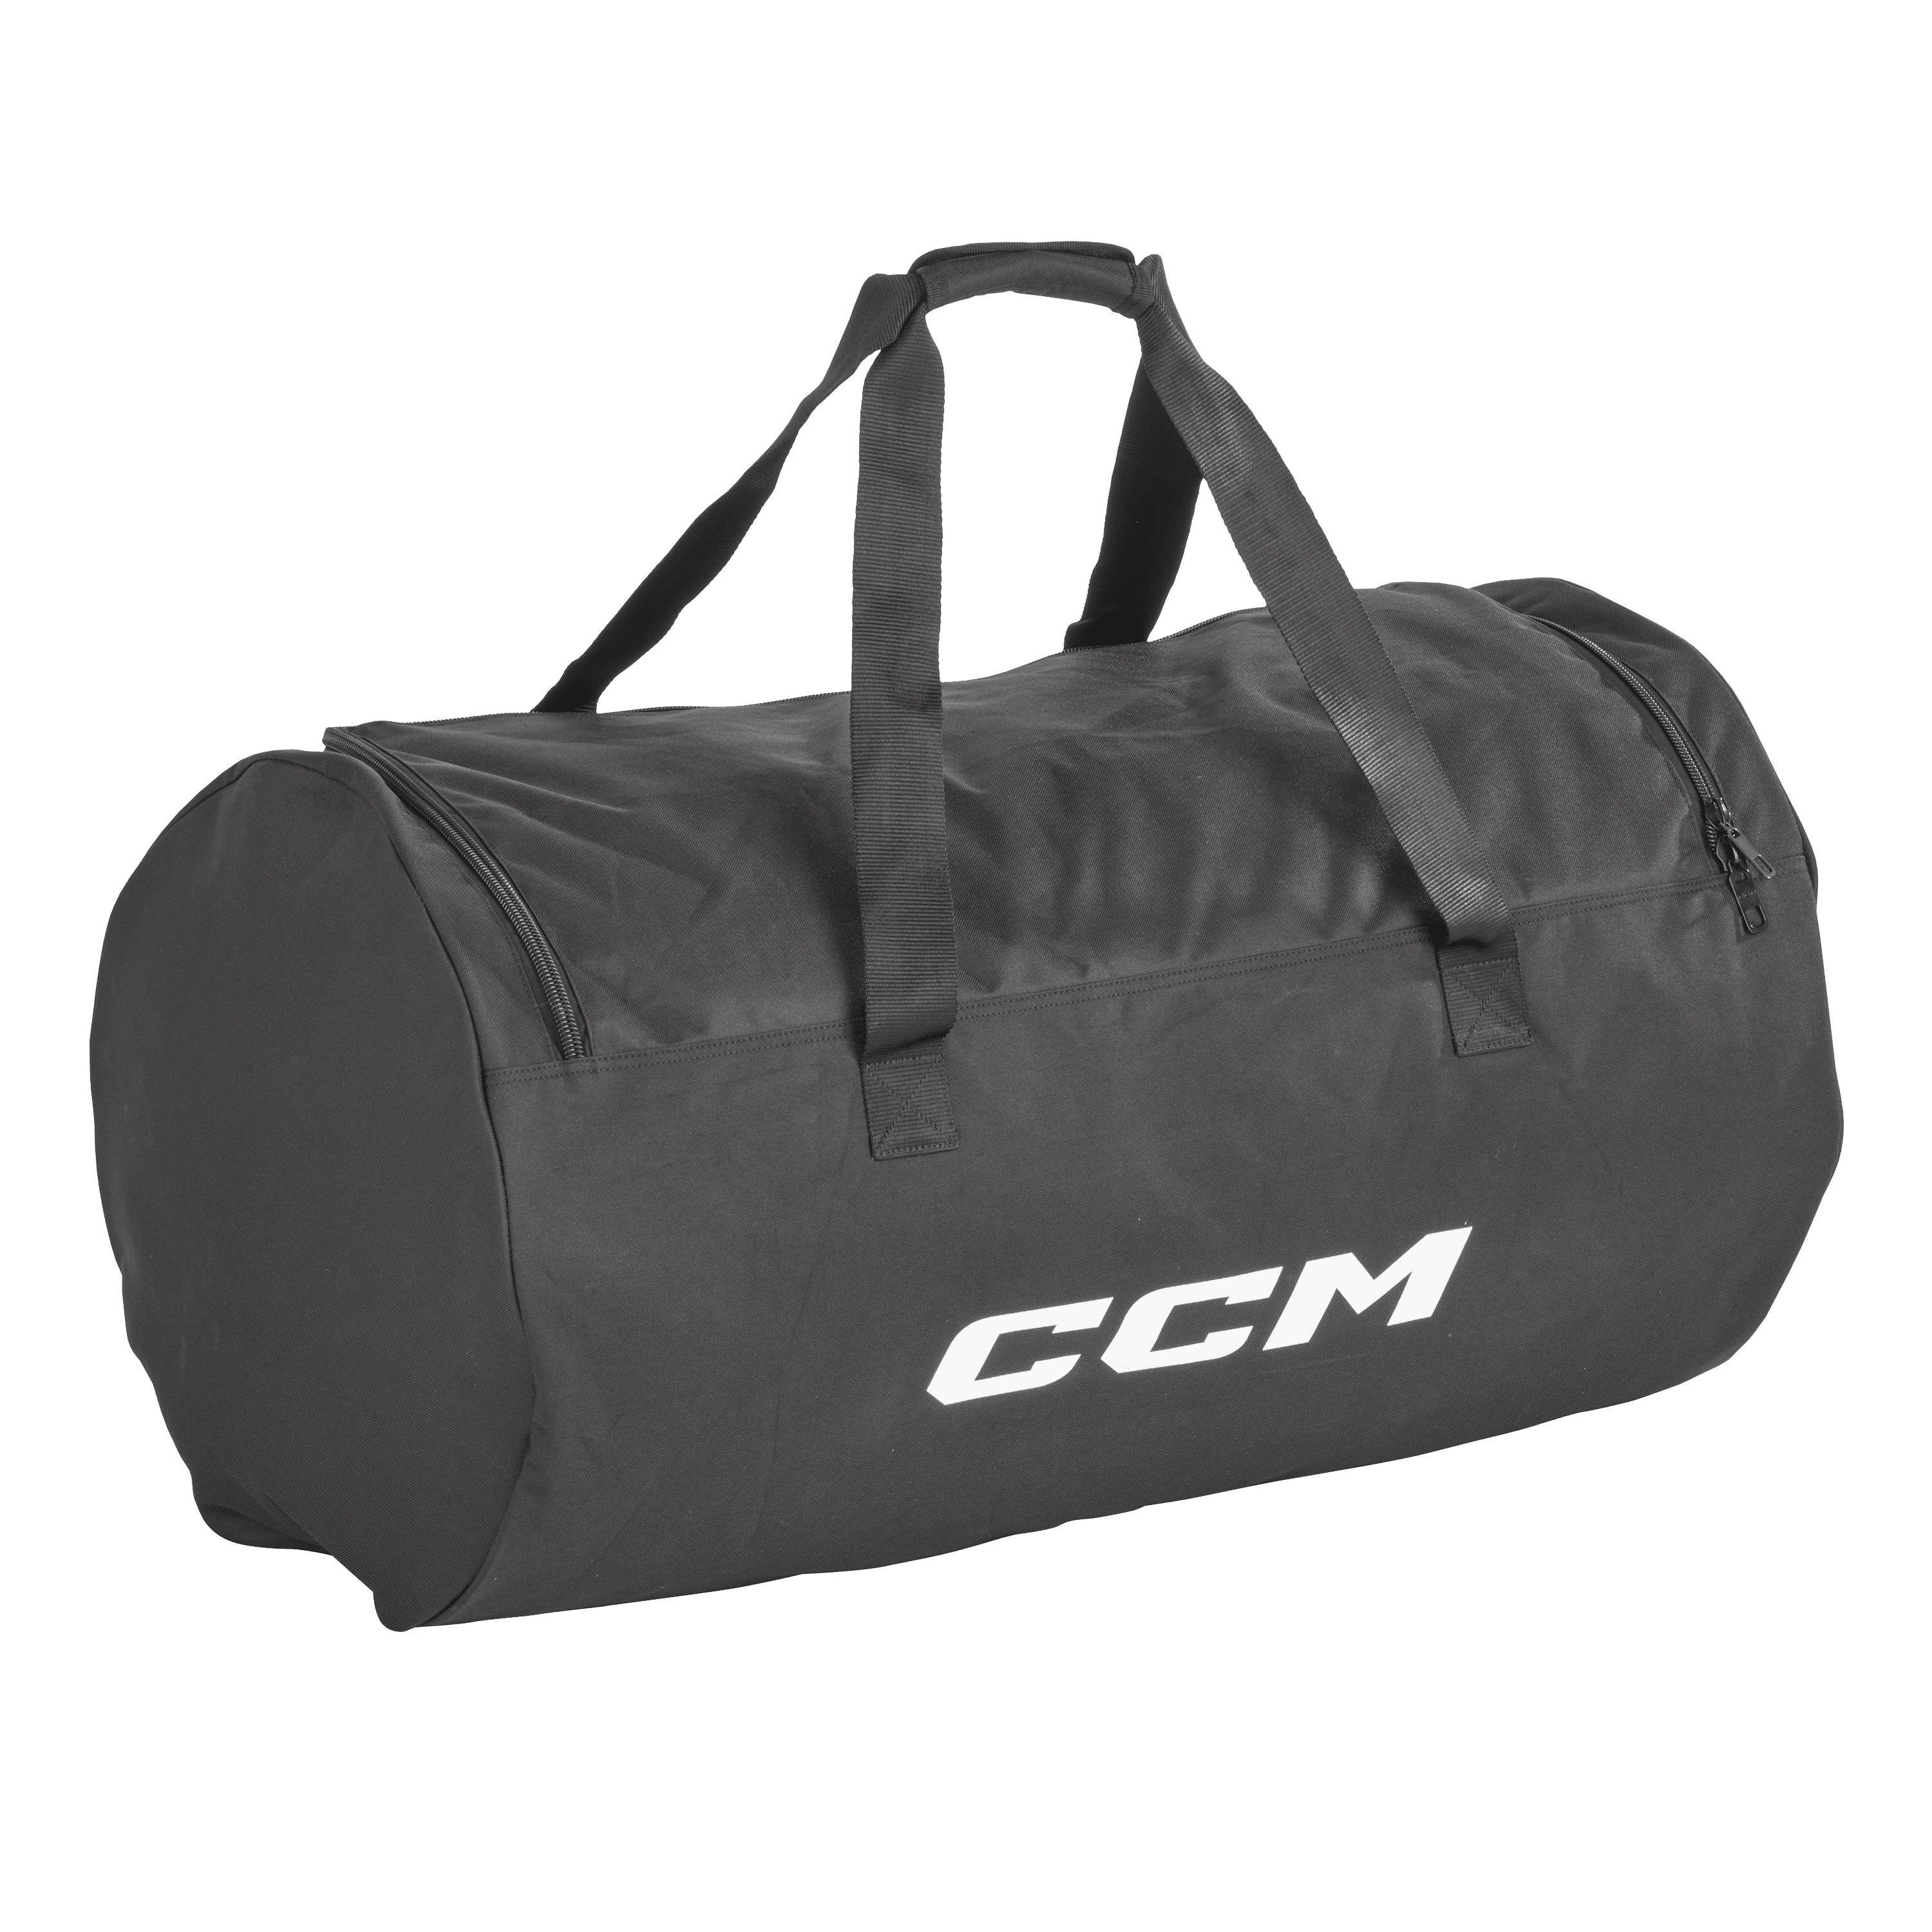 Tasche CCM 410 Player Basic Carry Bag YT 24"L x 16"H x 16" W